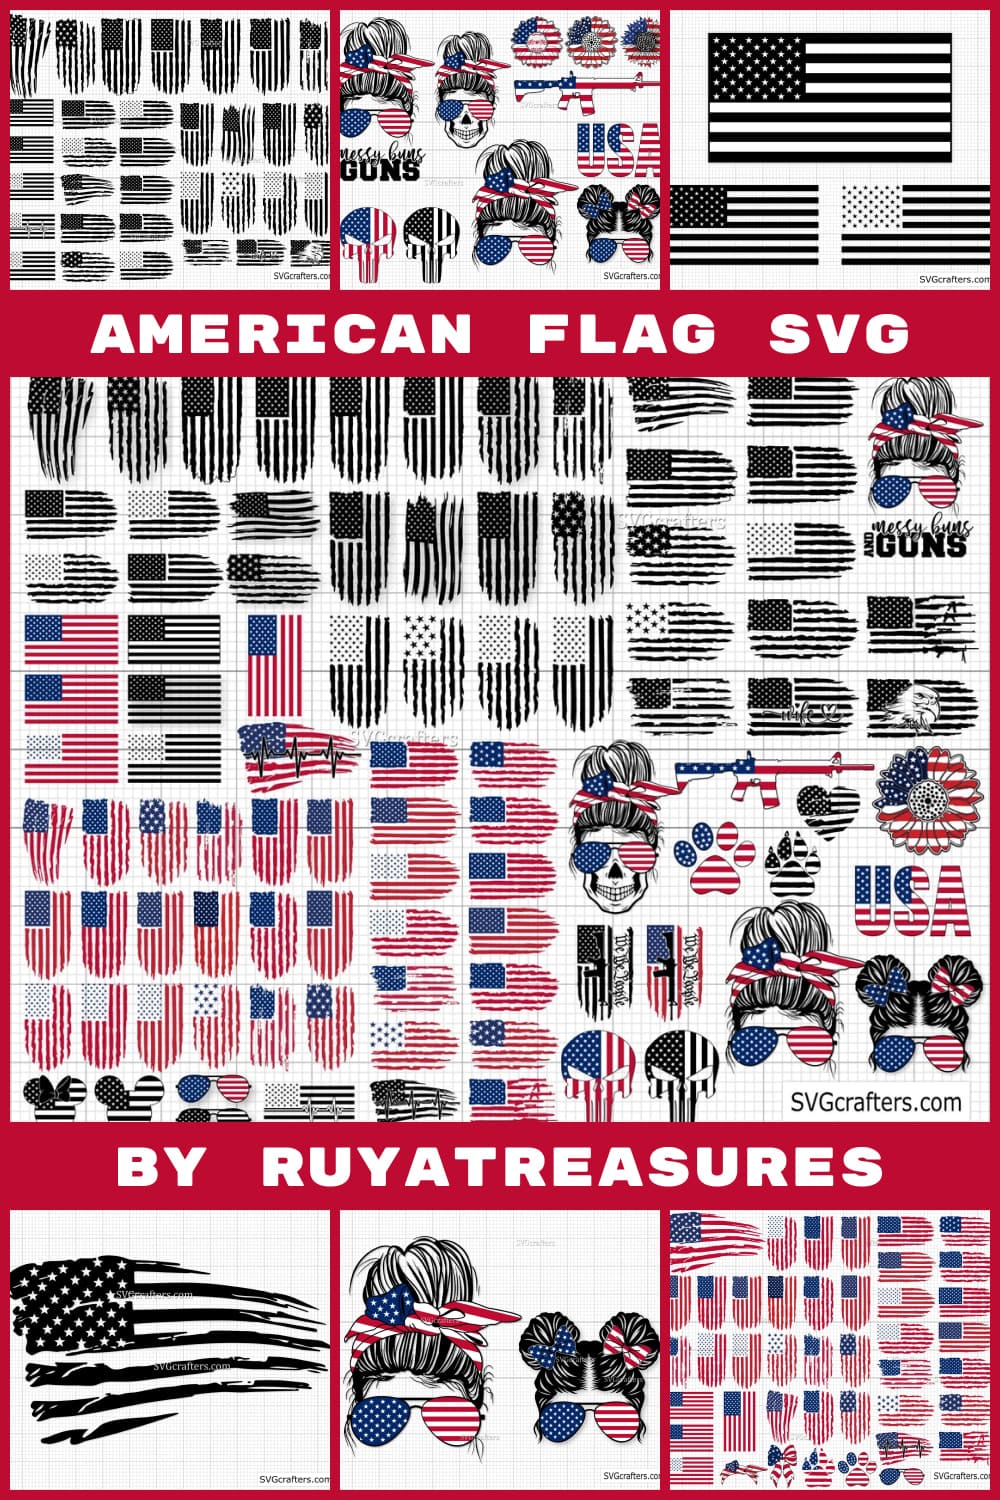 american flag svg pinterest image.